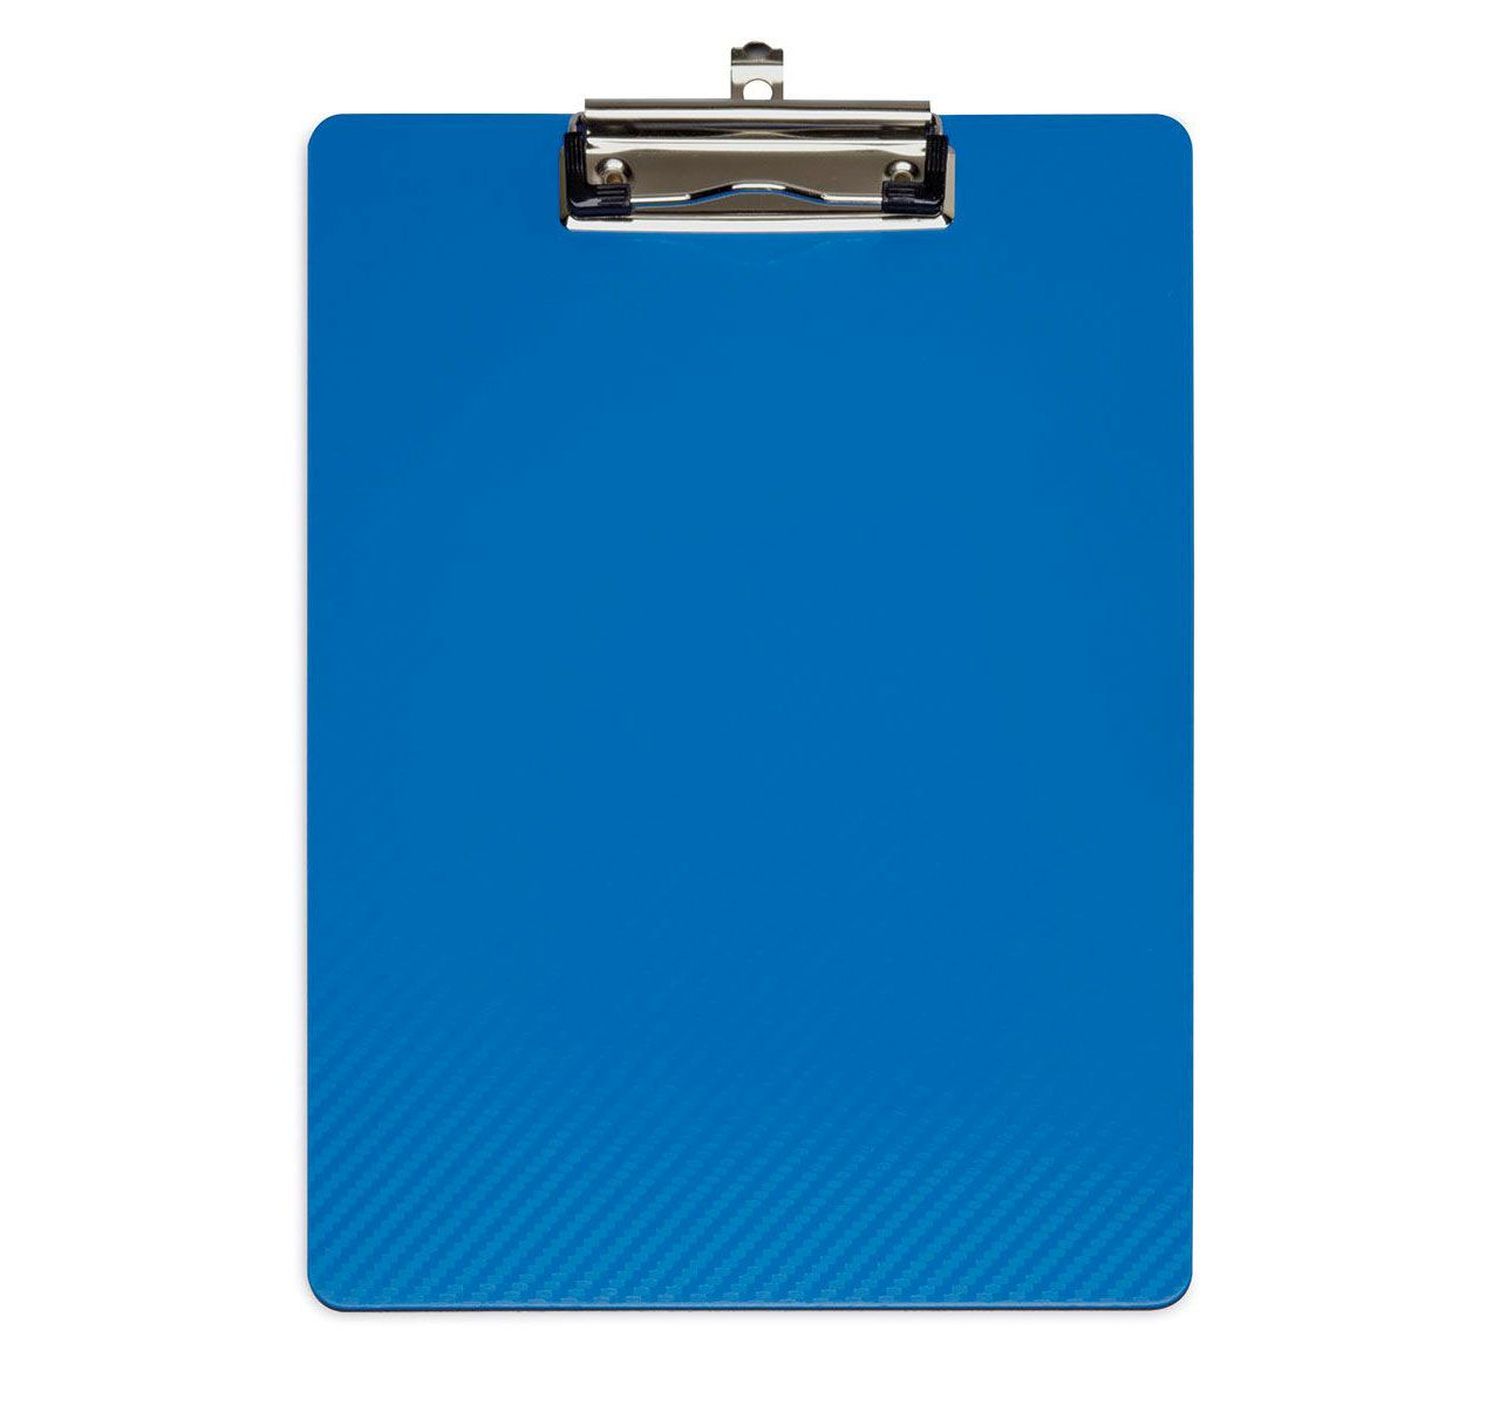 Maul Klemmbrett Schreibplatte DIN A4, aus PP, blau / schwarz